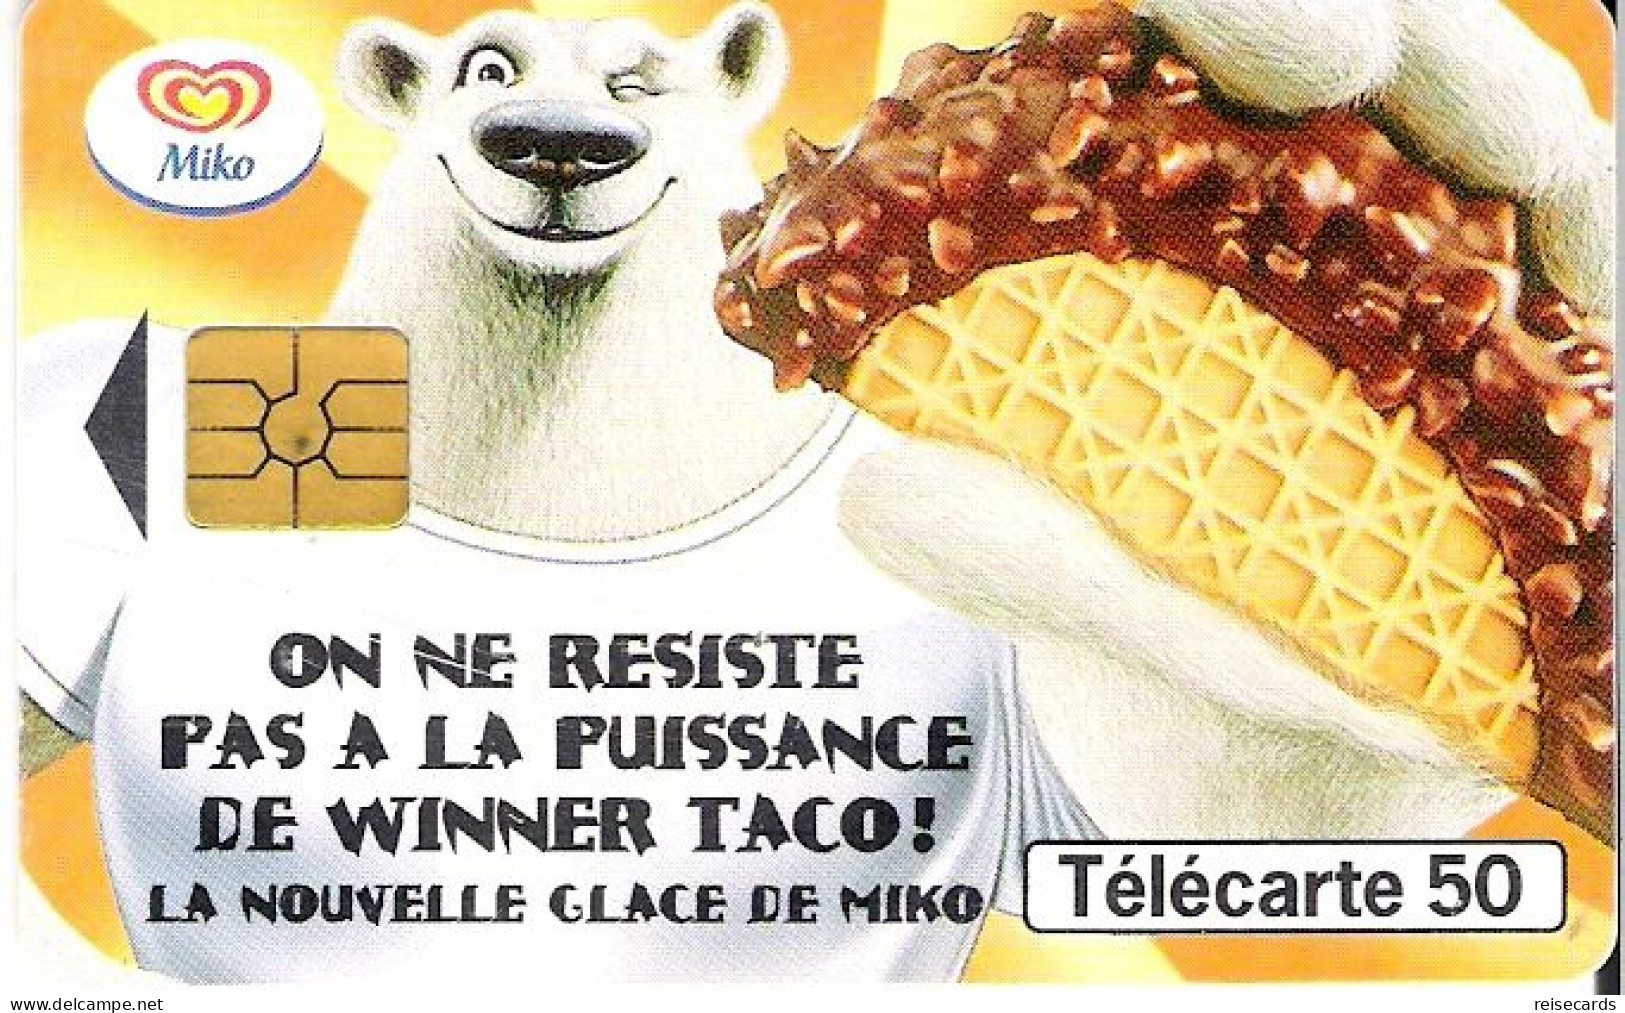 France: France Telecom 06/98 F887 Miko - 1998